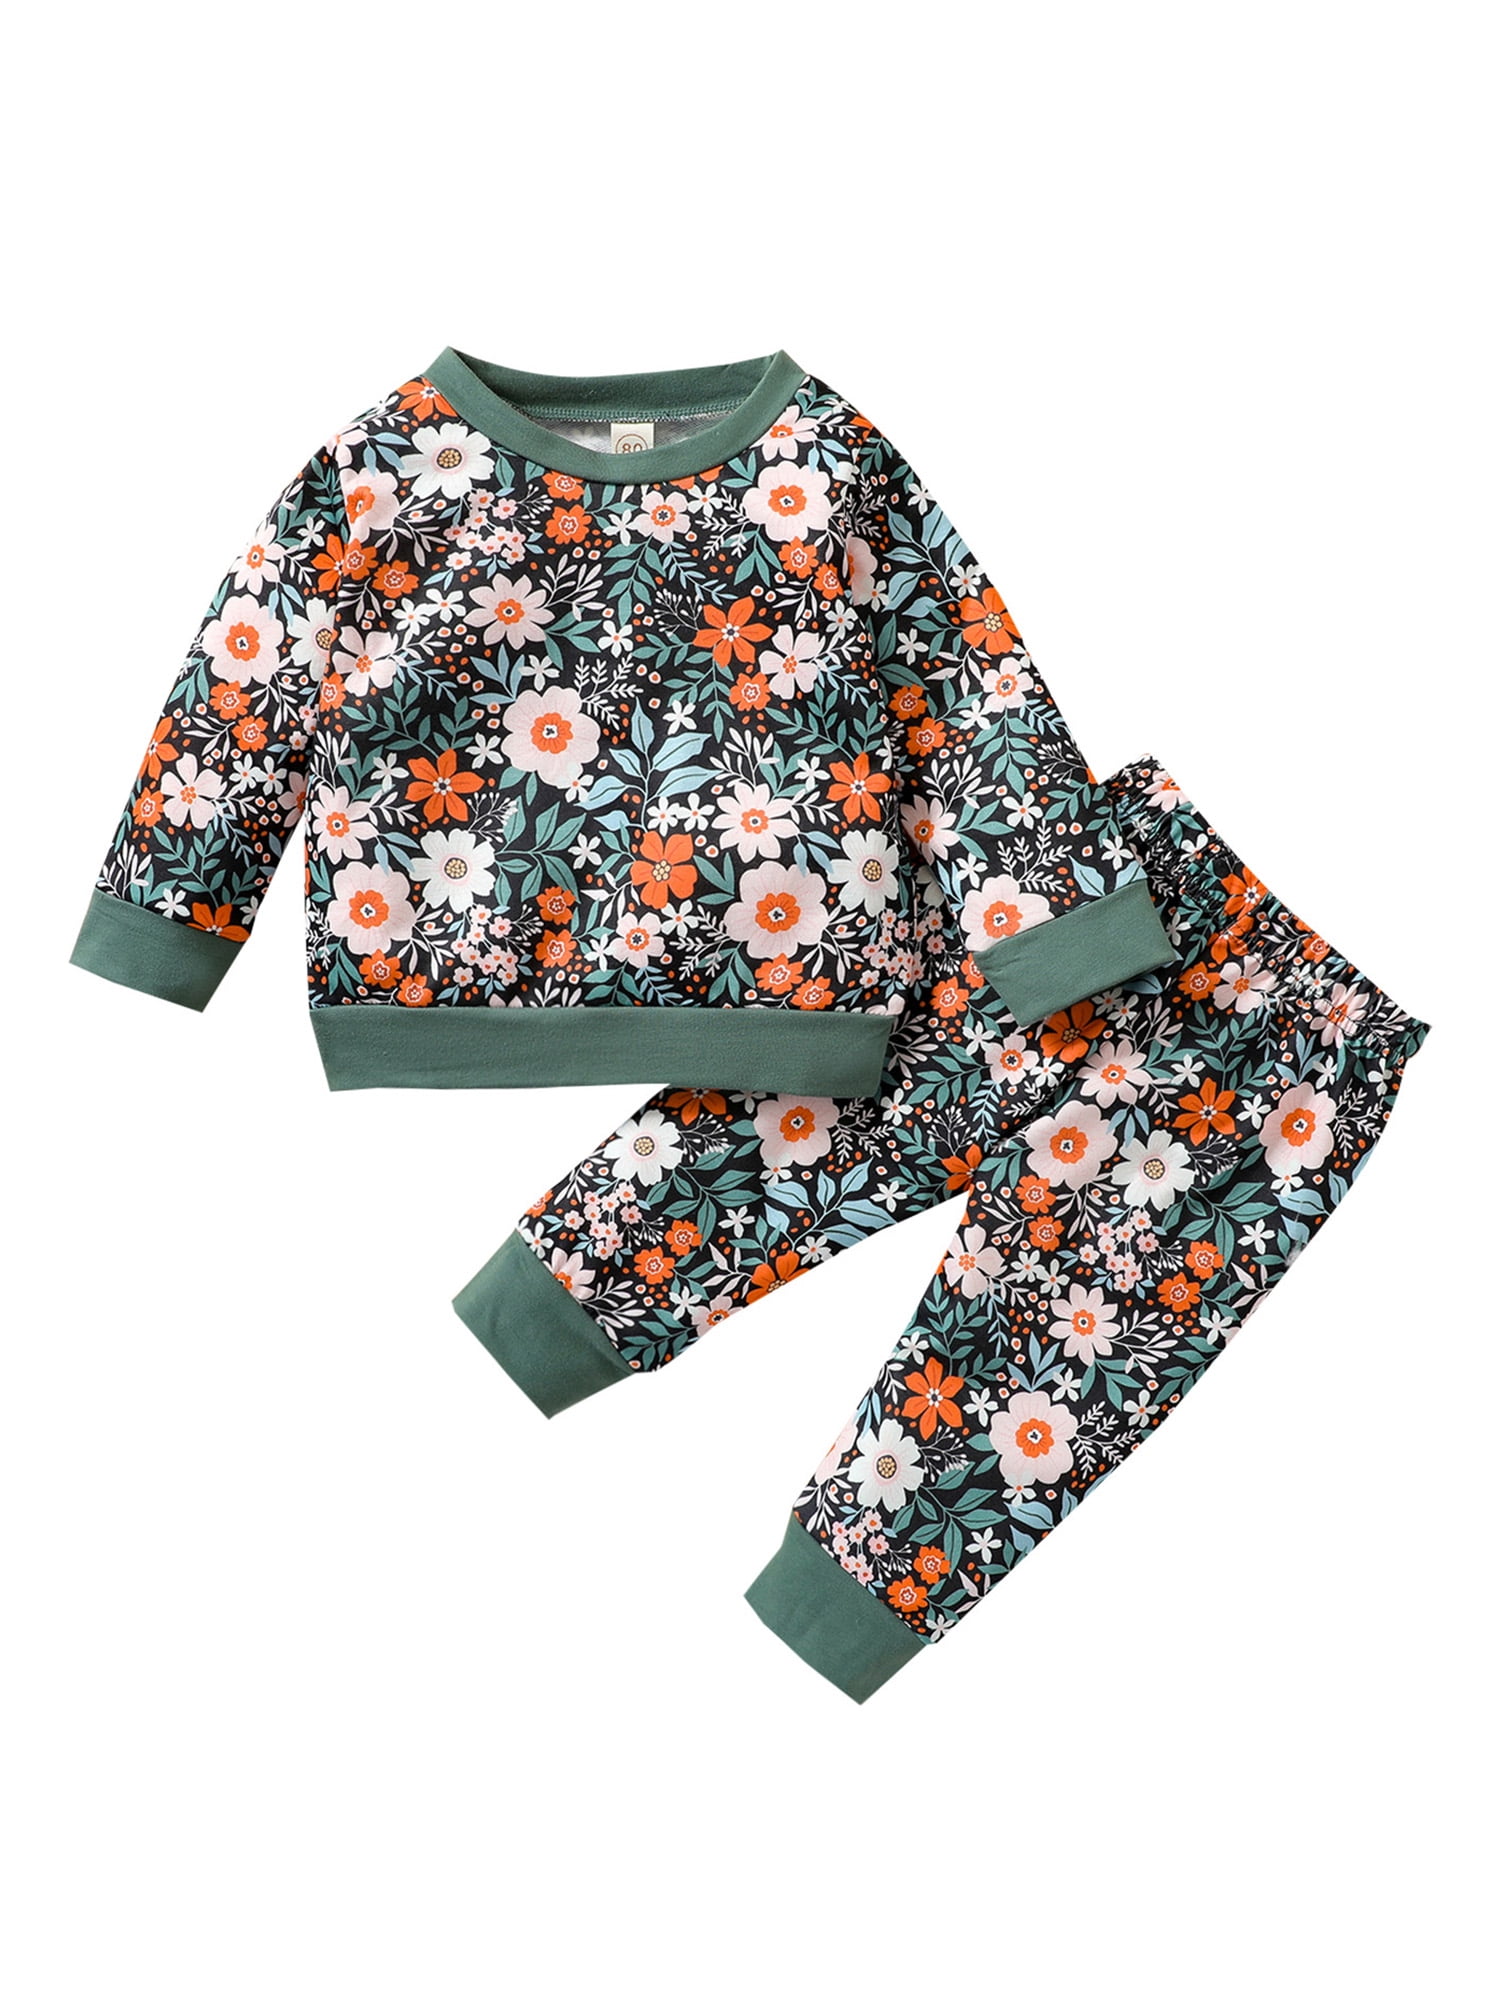 Pants Tracksuit Outfits Set UK 2PCS Toddler Kids Girls Clothes Sweatshirt Tops